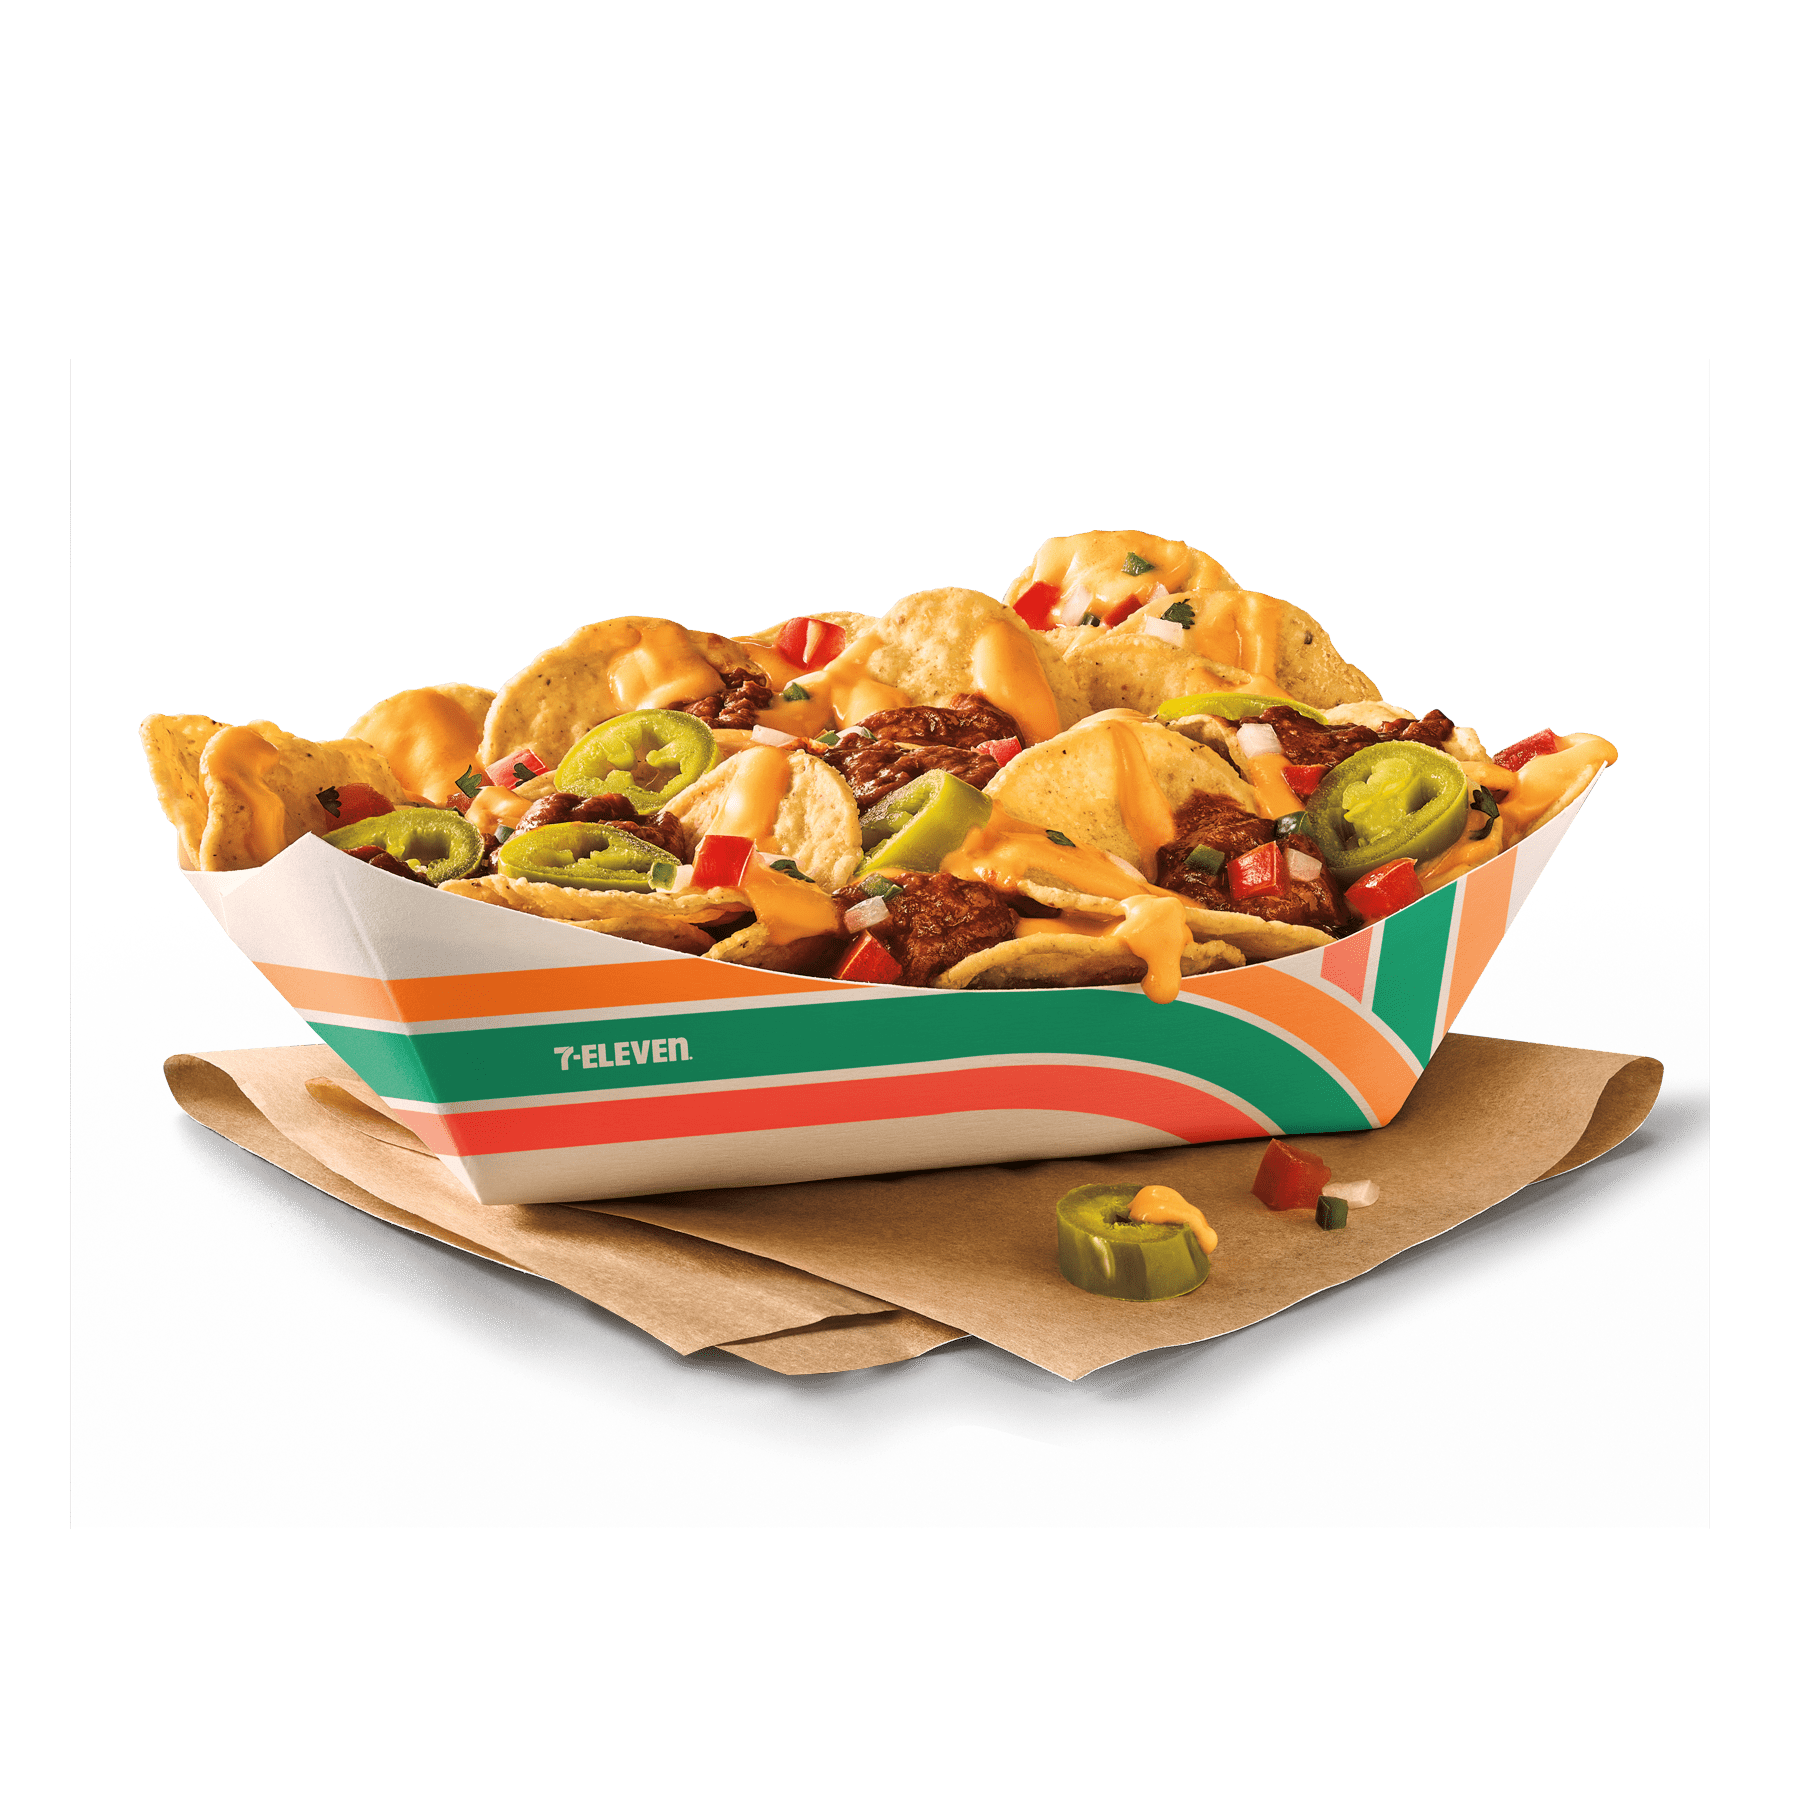 7-Eleven Offers Mini Taco Deal - CStore Decisions